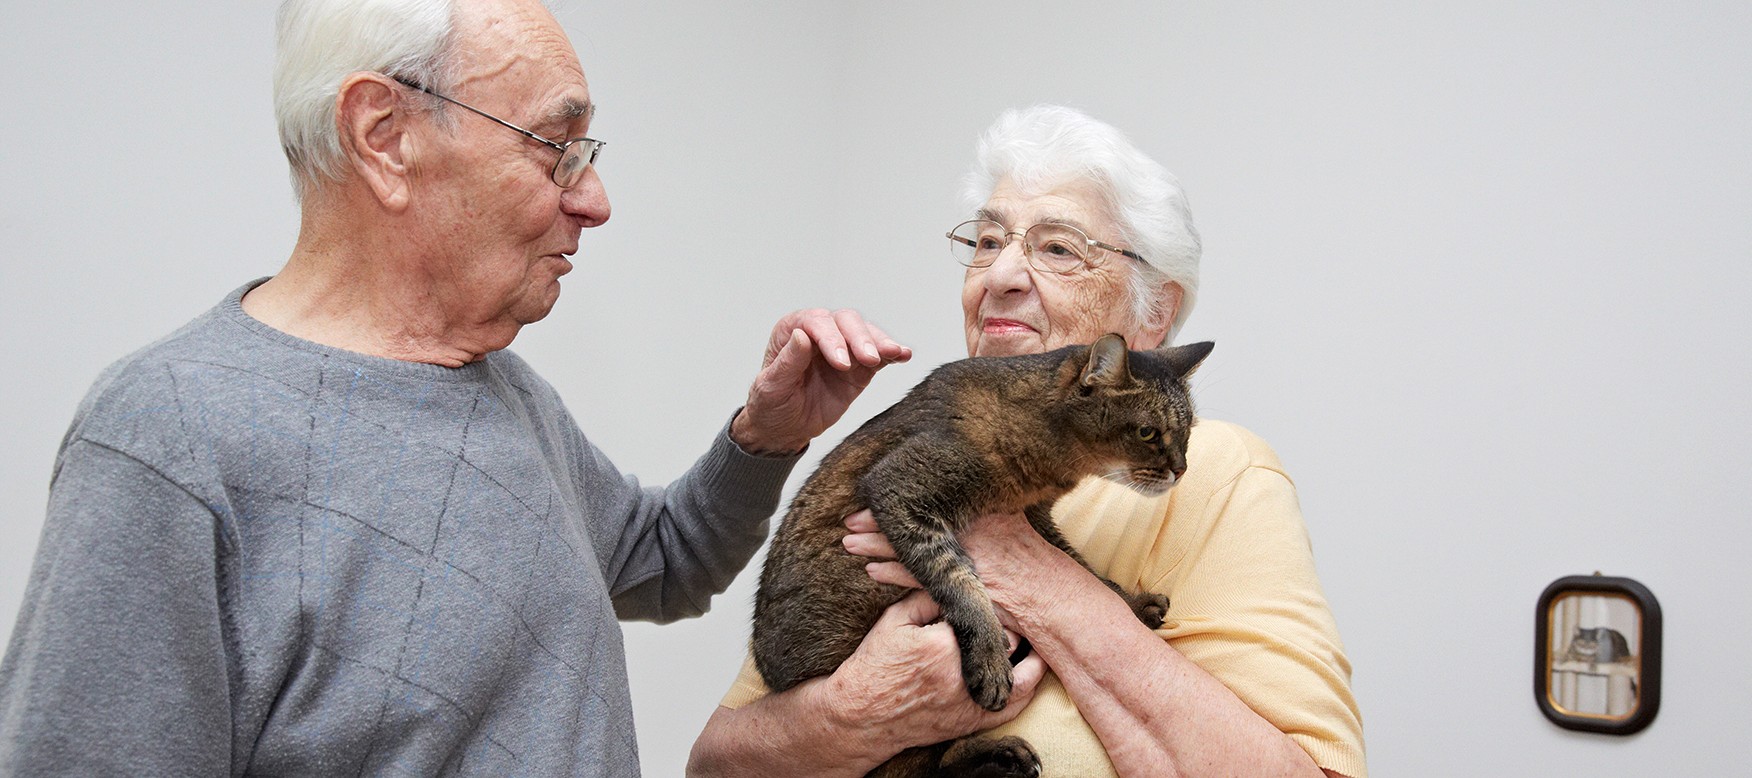 Symbolbild: Senior und Seniorin mit Katze